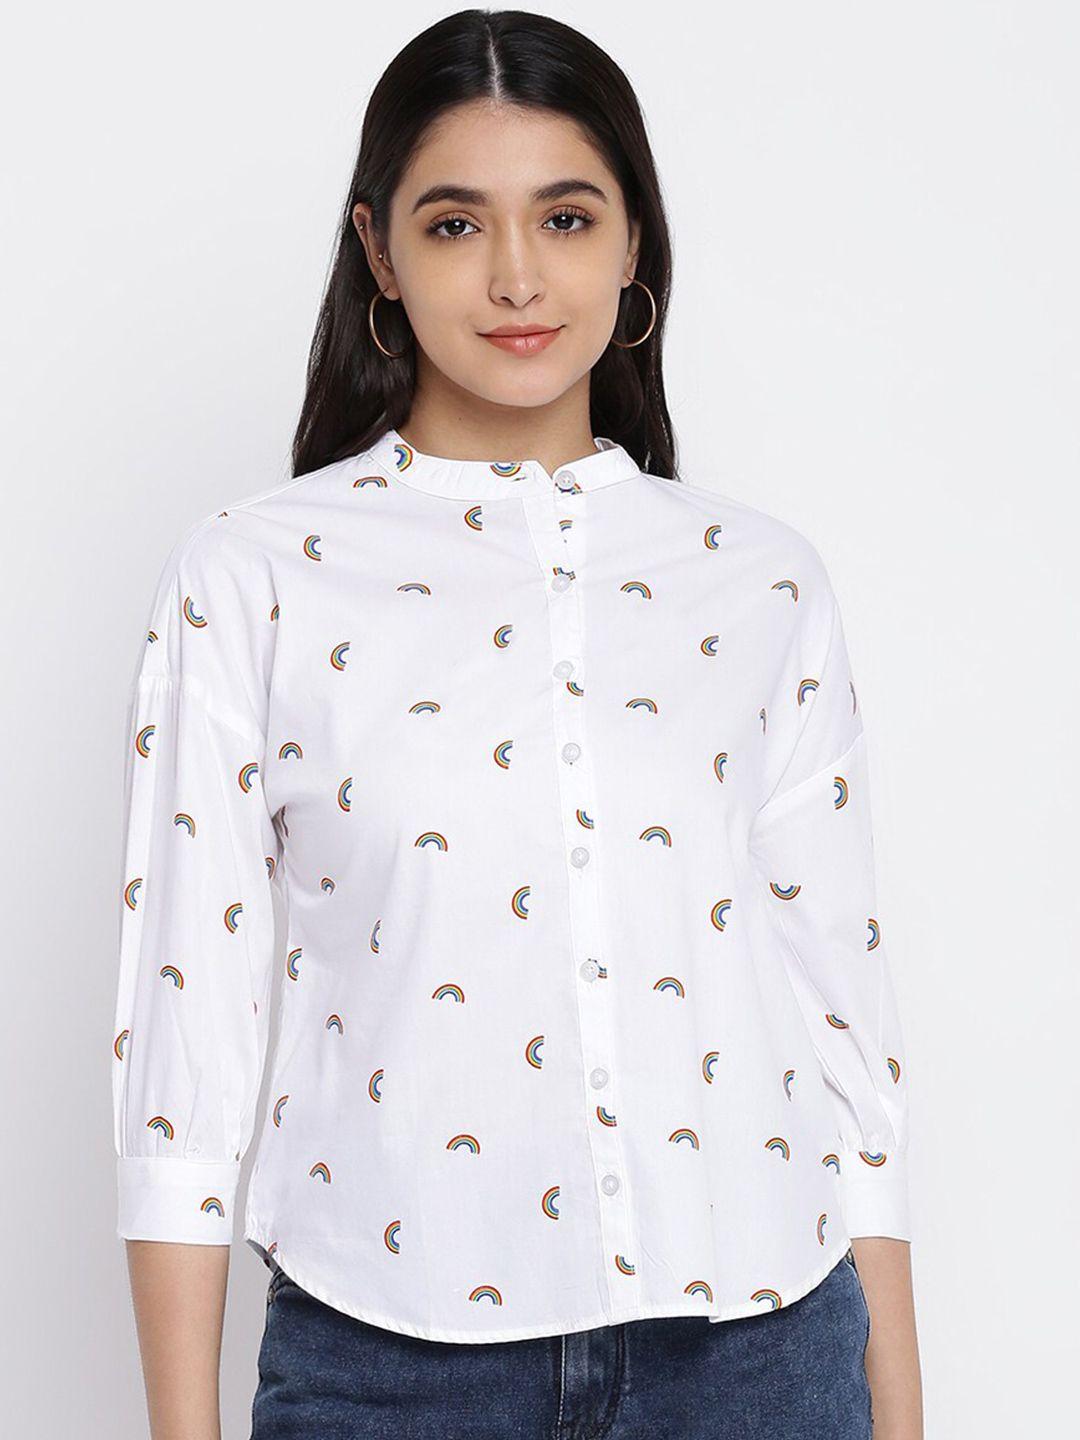 abof women white geometric printed casual shirt